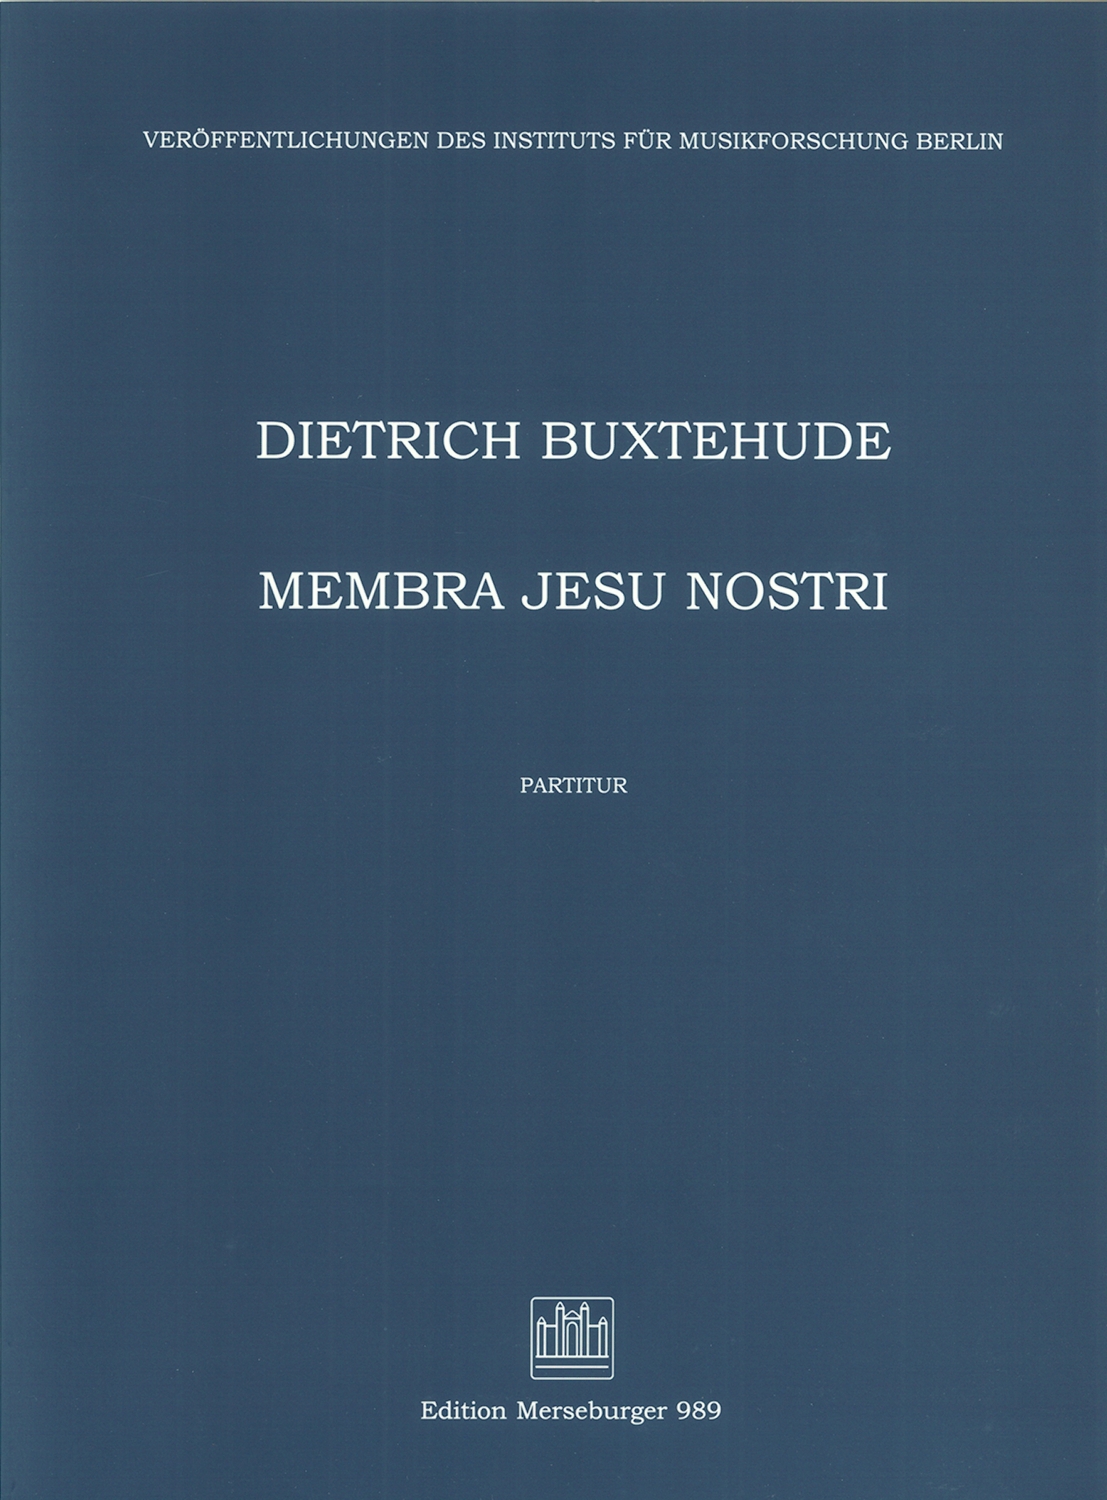 dietrich-buxtehude-membra-jesu-nostri-buxwv-75-gch_0003.JPG